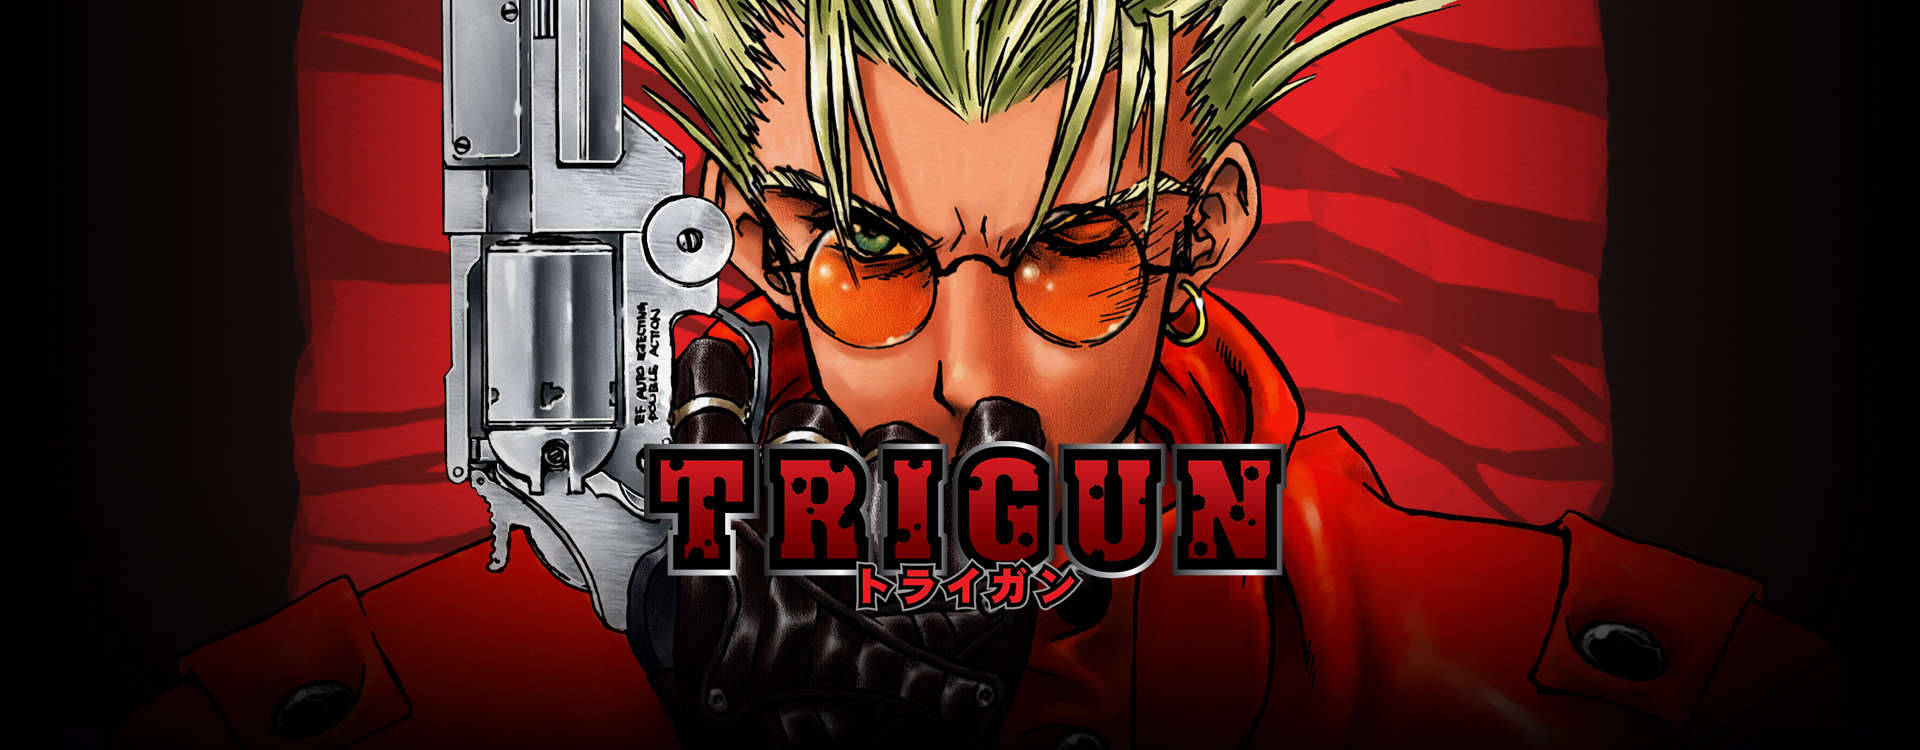 Trigun Eng Sub Torrent Download